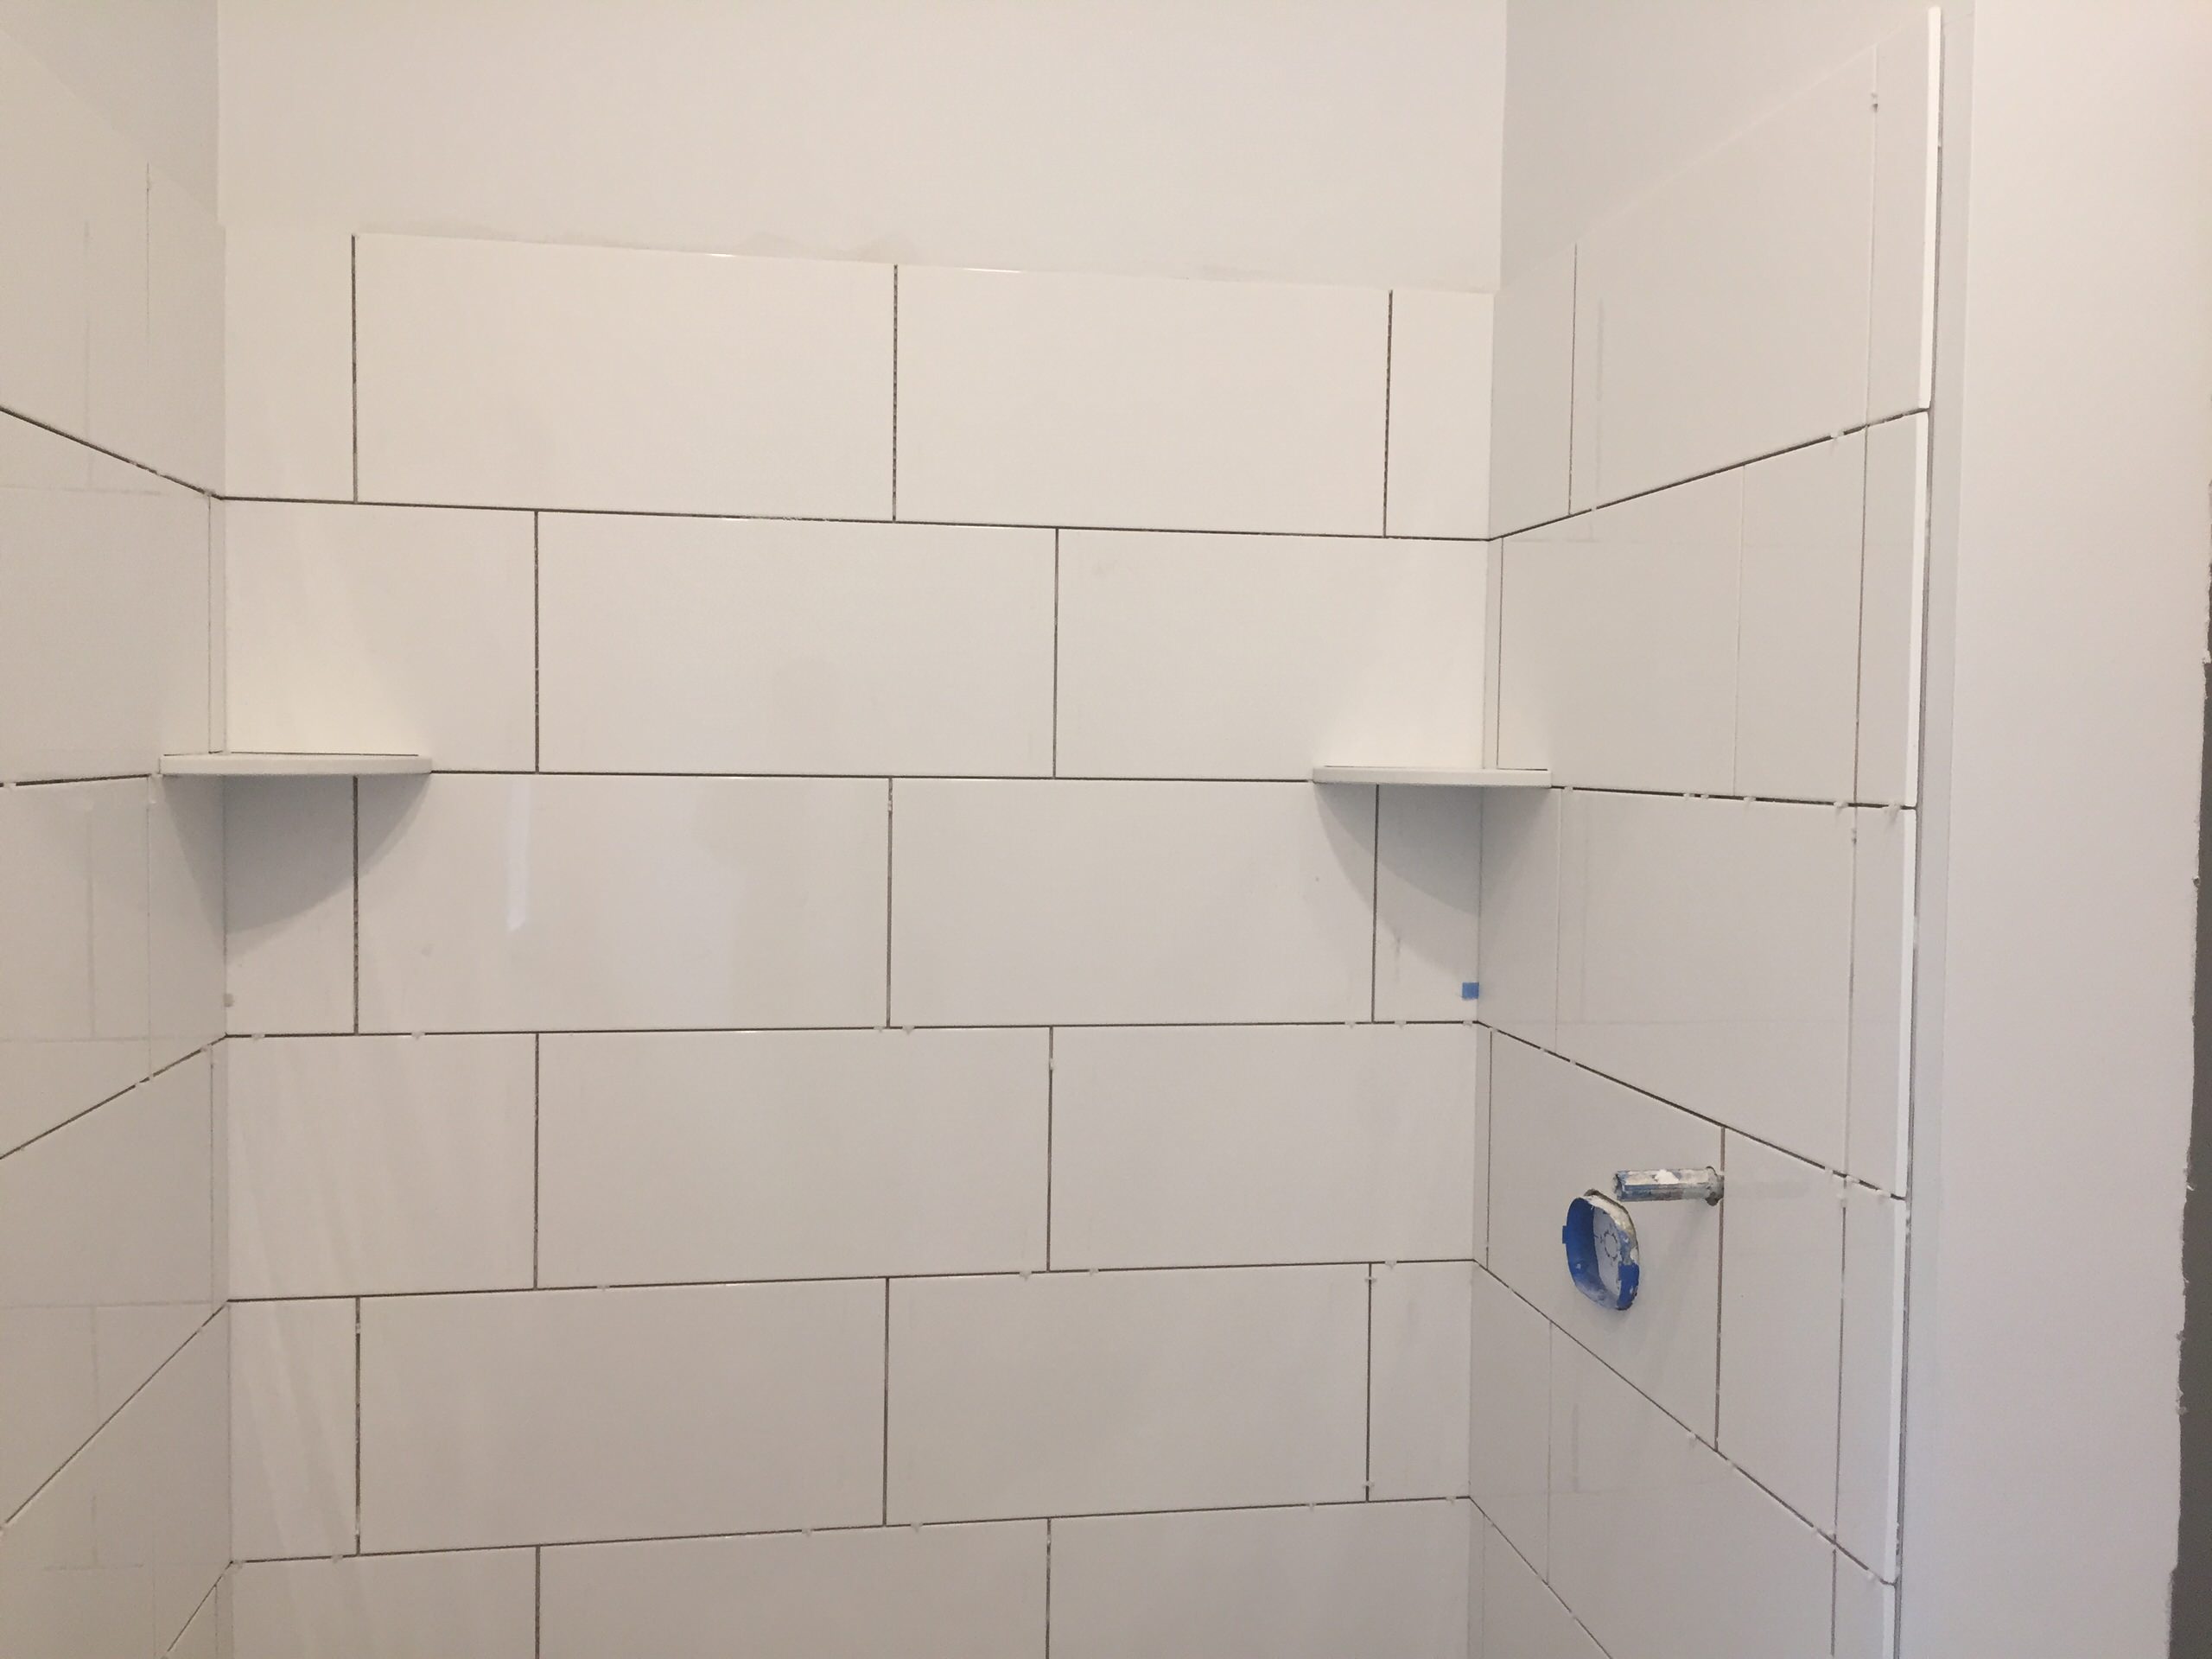 Bathroom and tile works